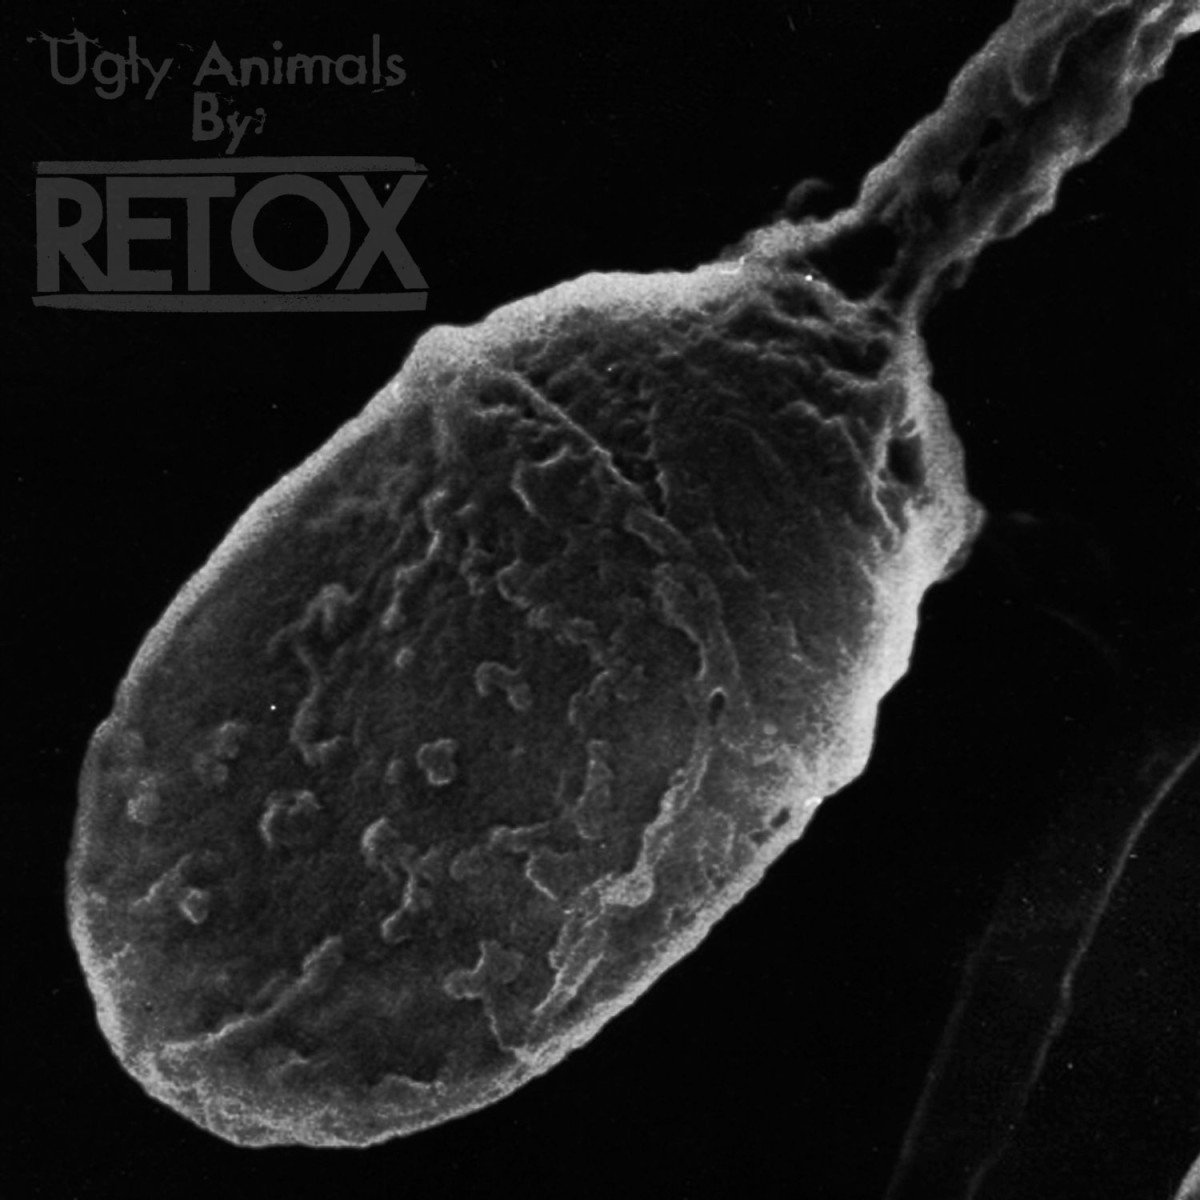 Retox - Ugly Animals (CD)